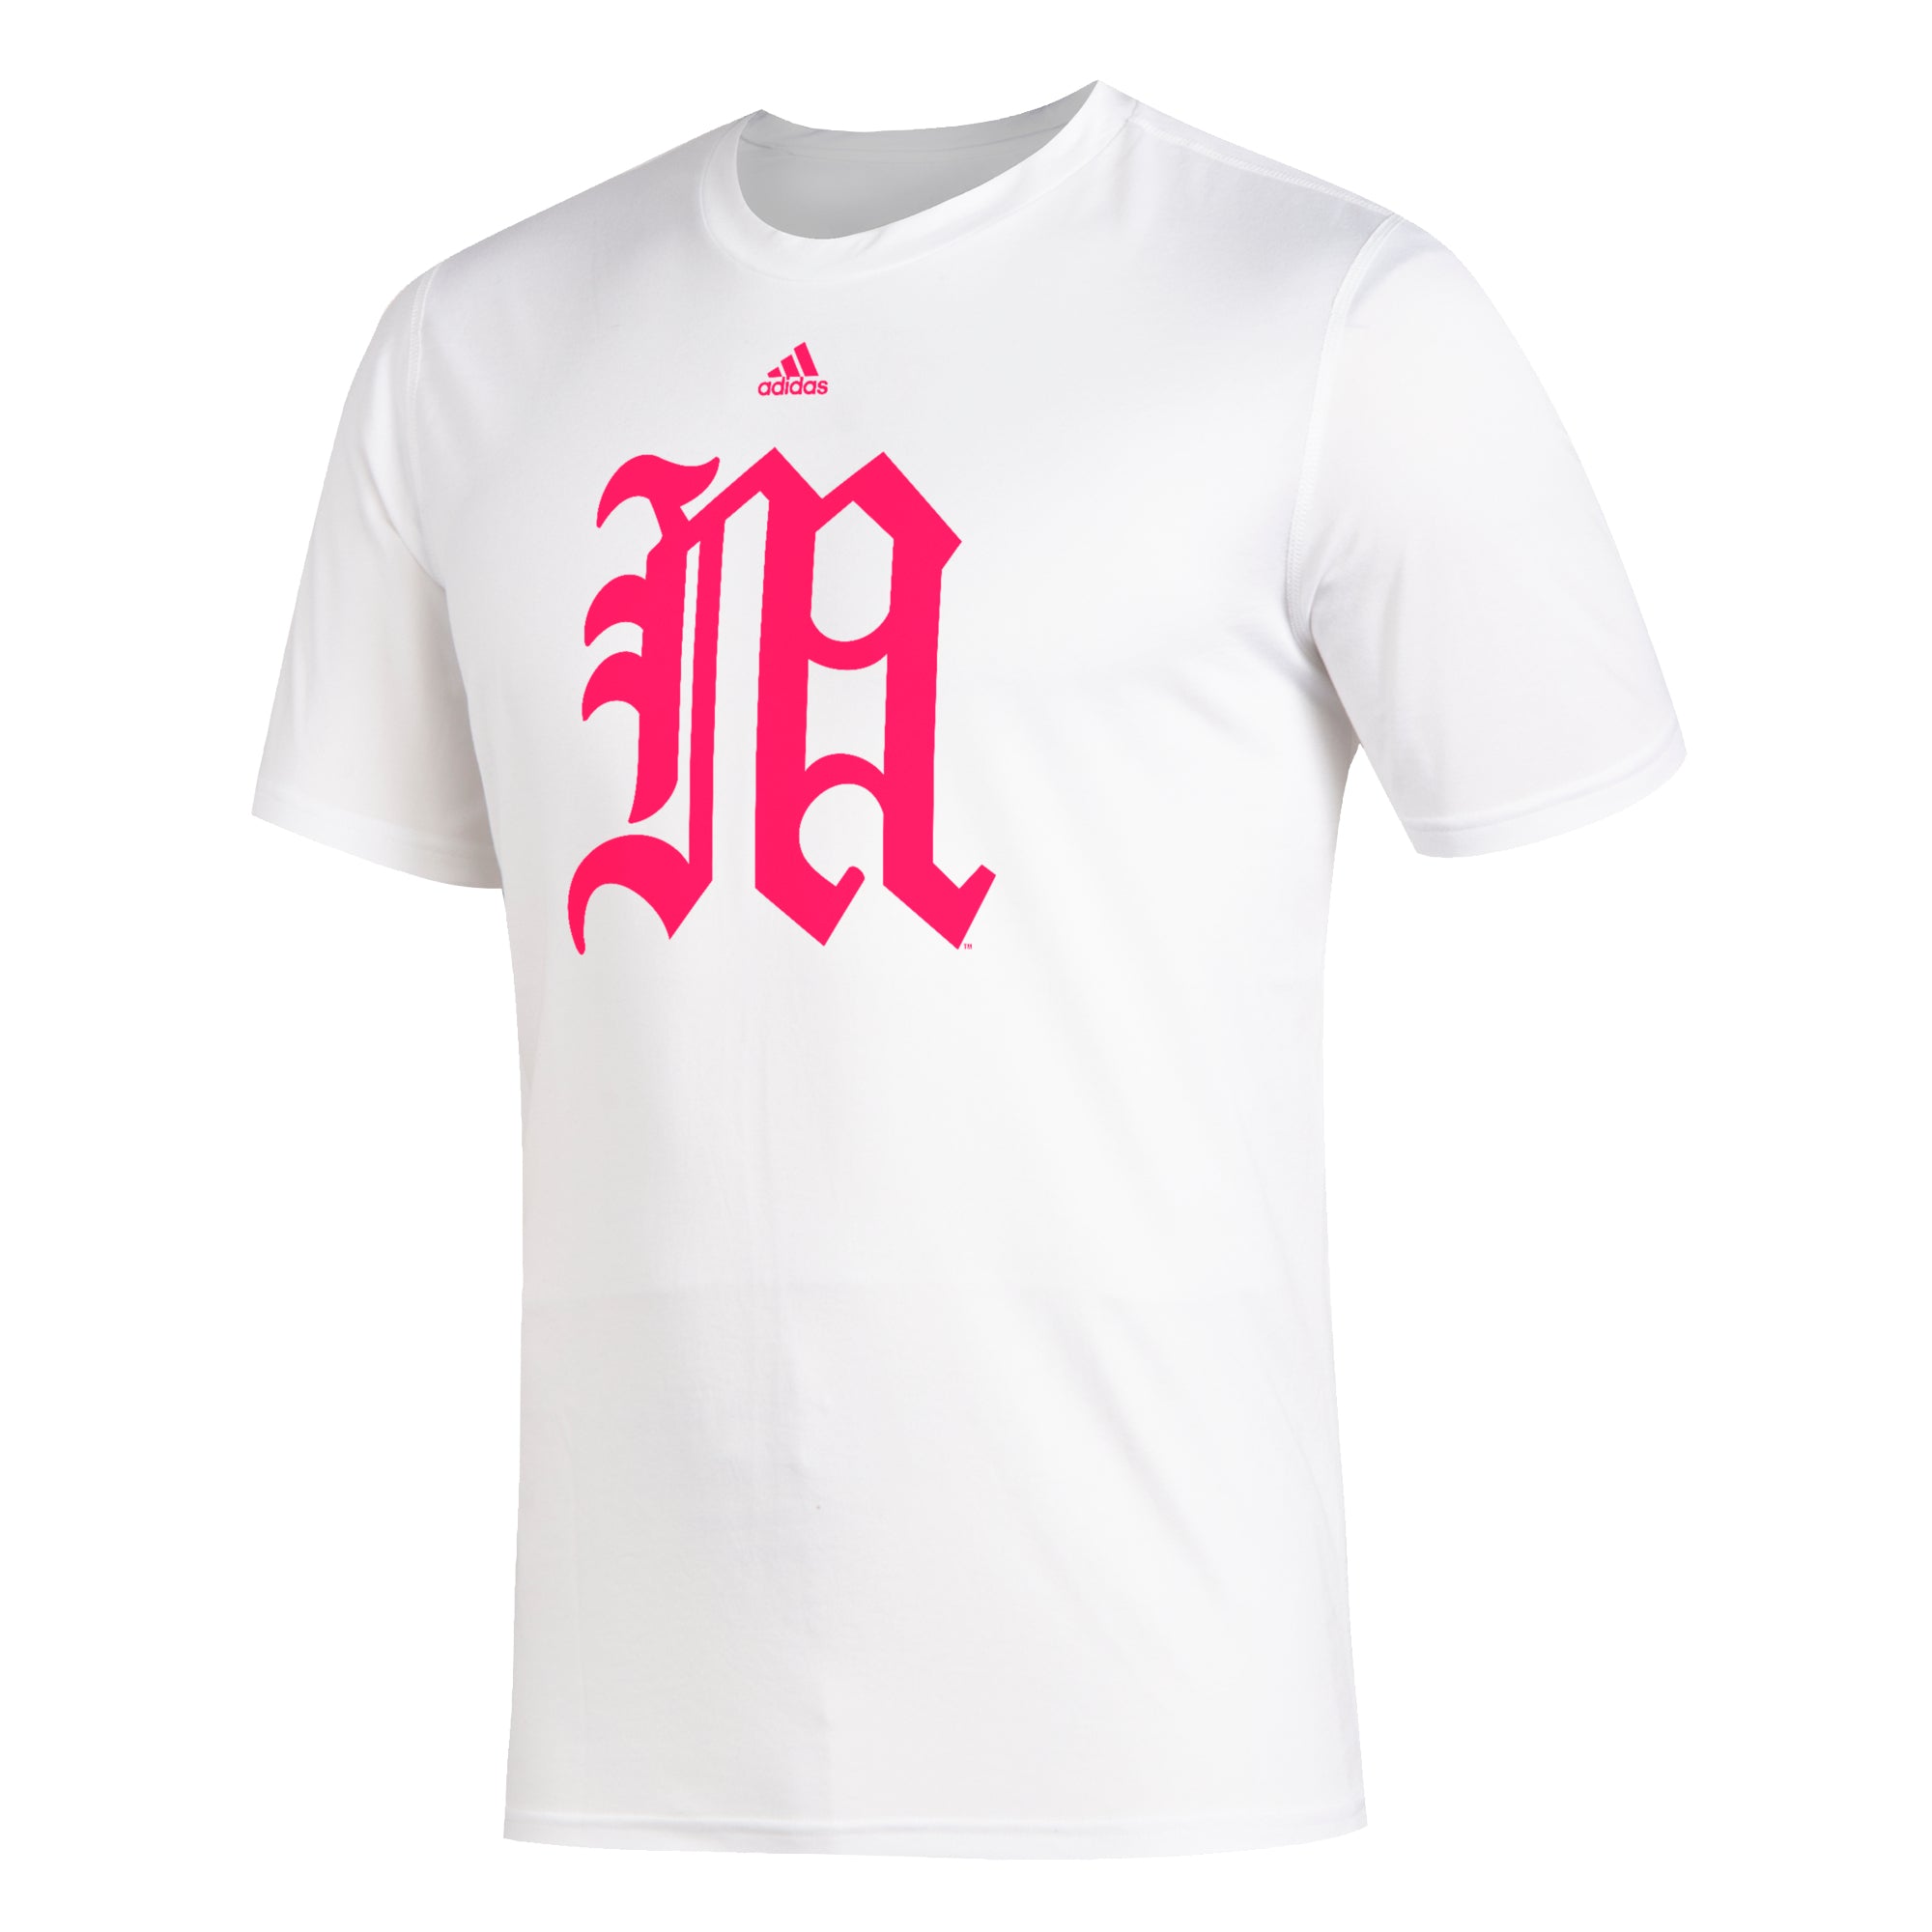 Miami Hurricanes adidas Creator Old English S/S T-Shirt - White/Pink